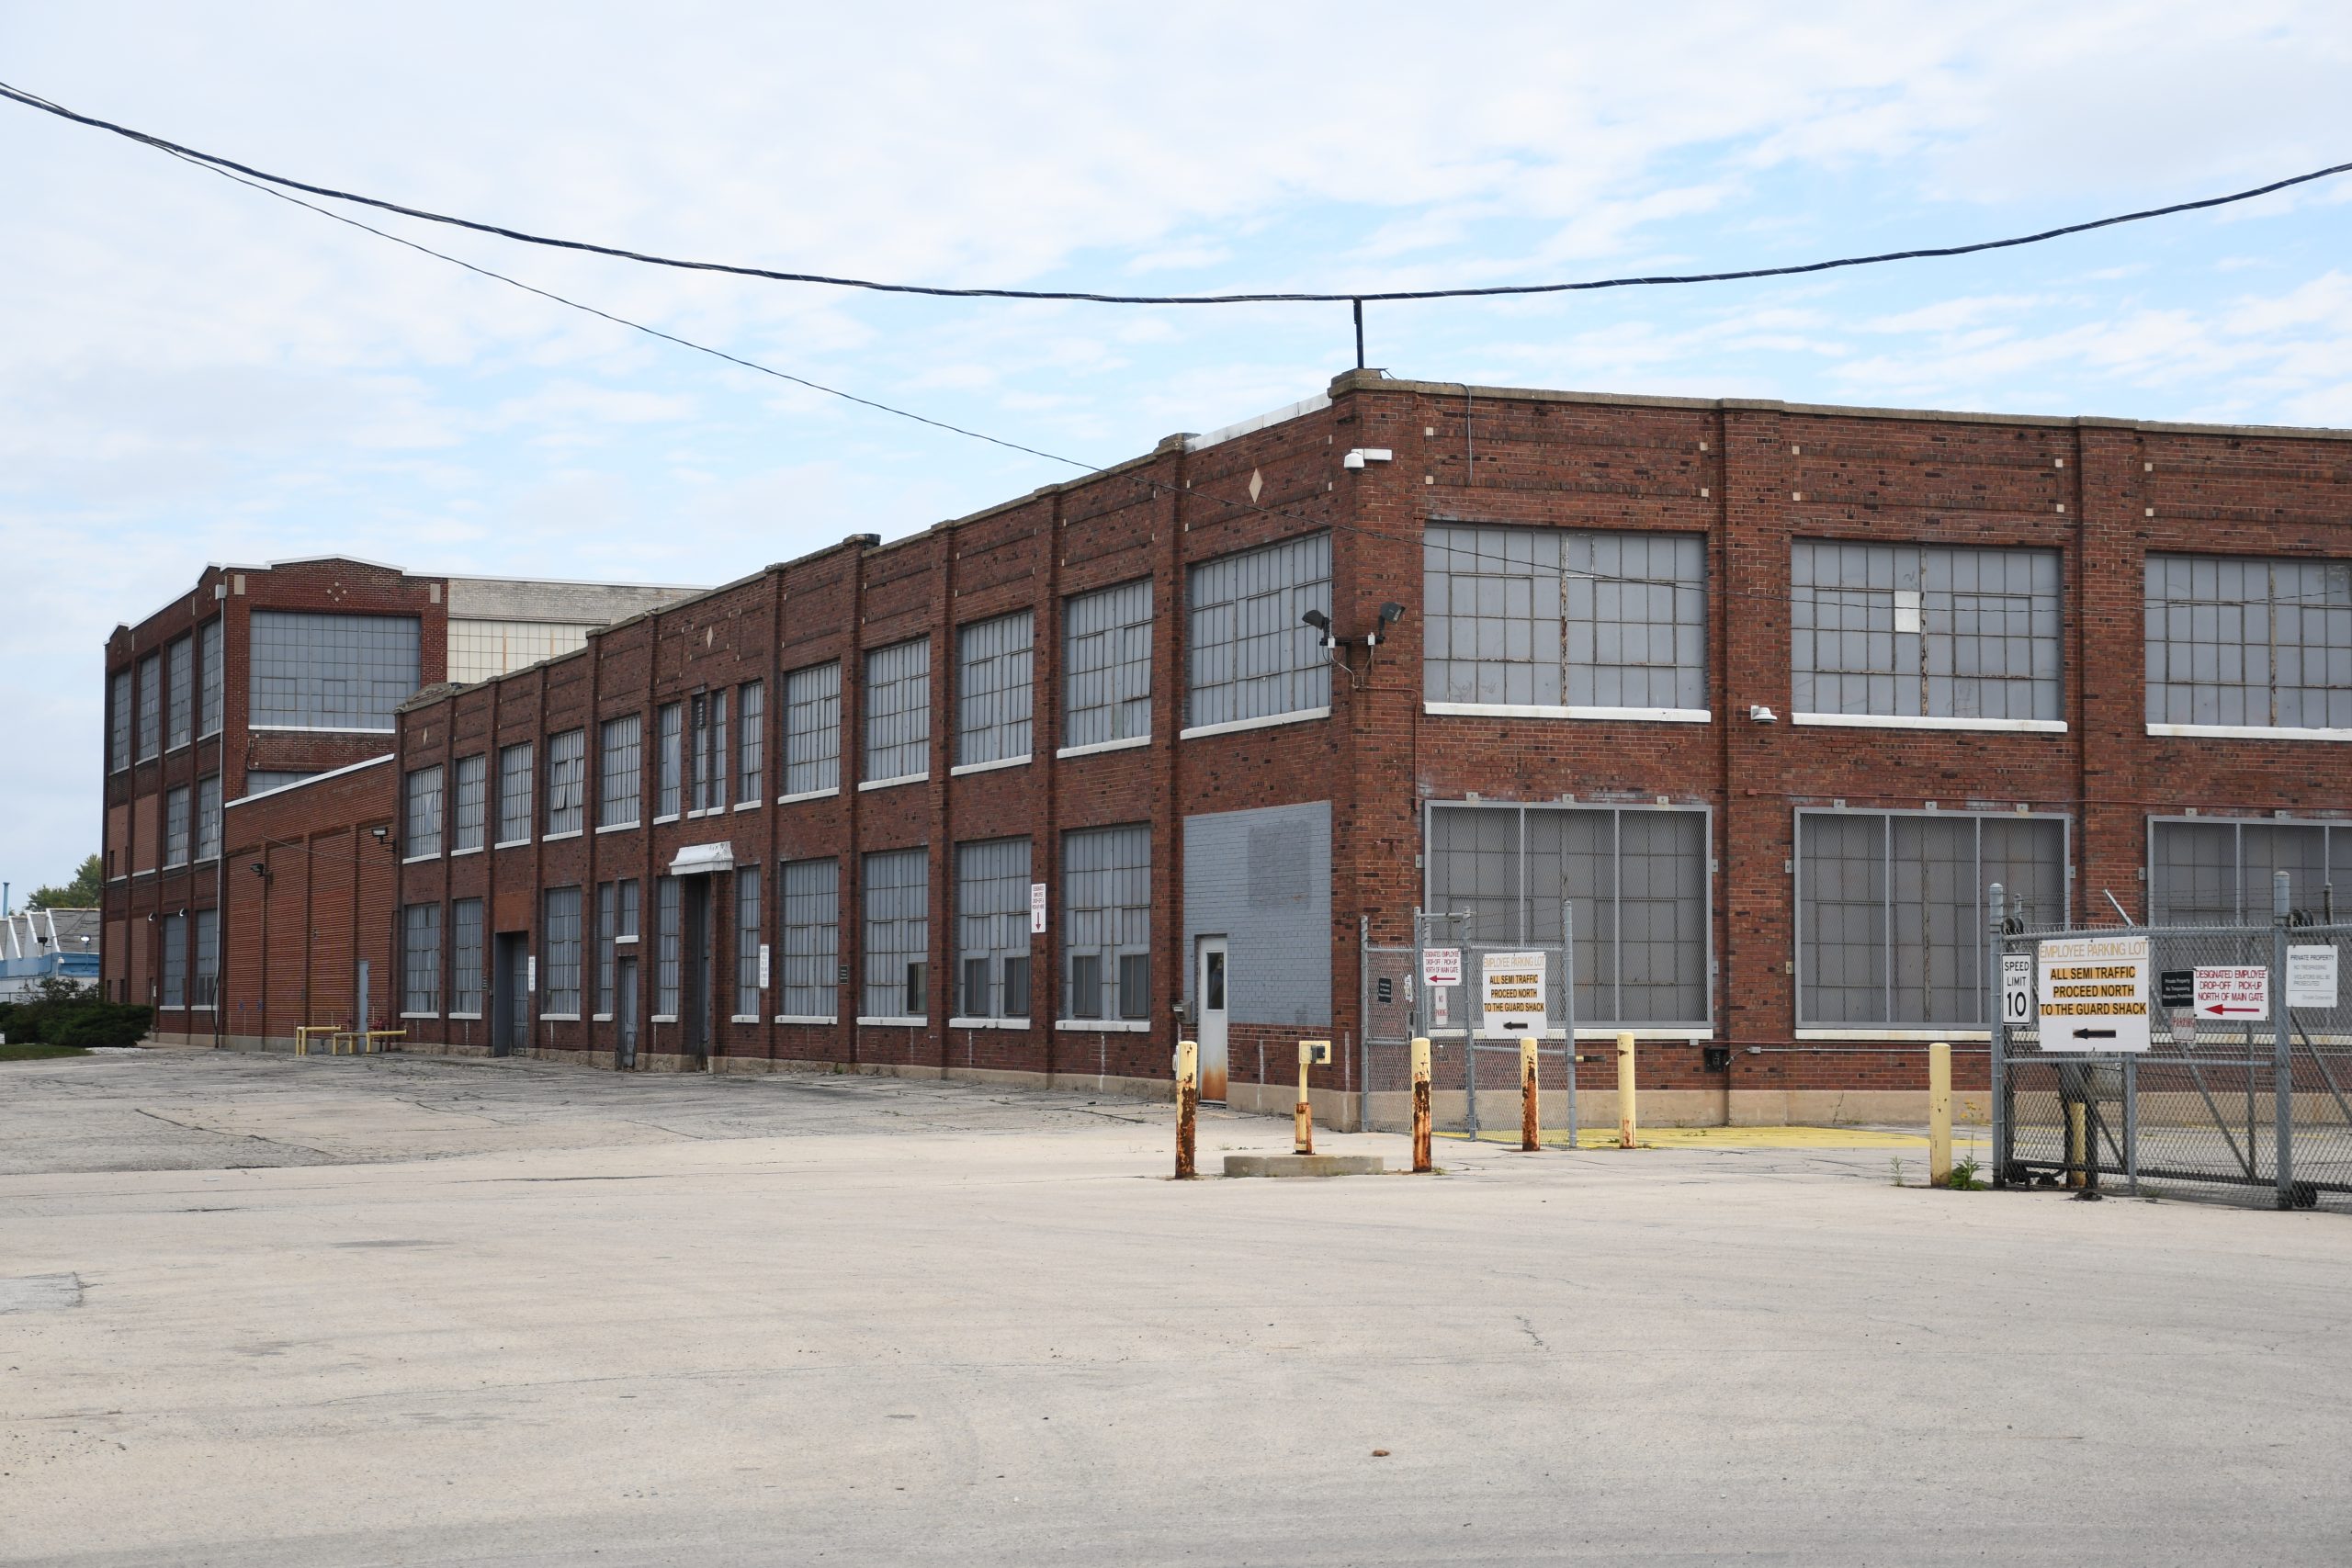 Mopar parts distribution center at 3280 S. Clement Ave. Photo by Jeramey Jannene.